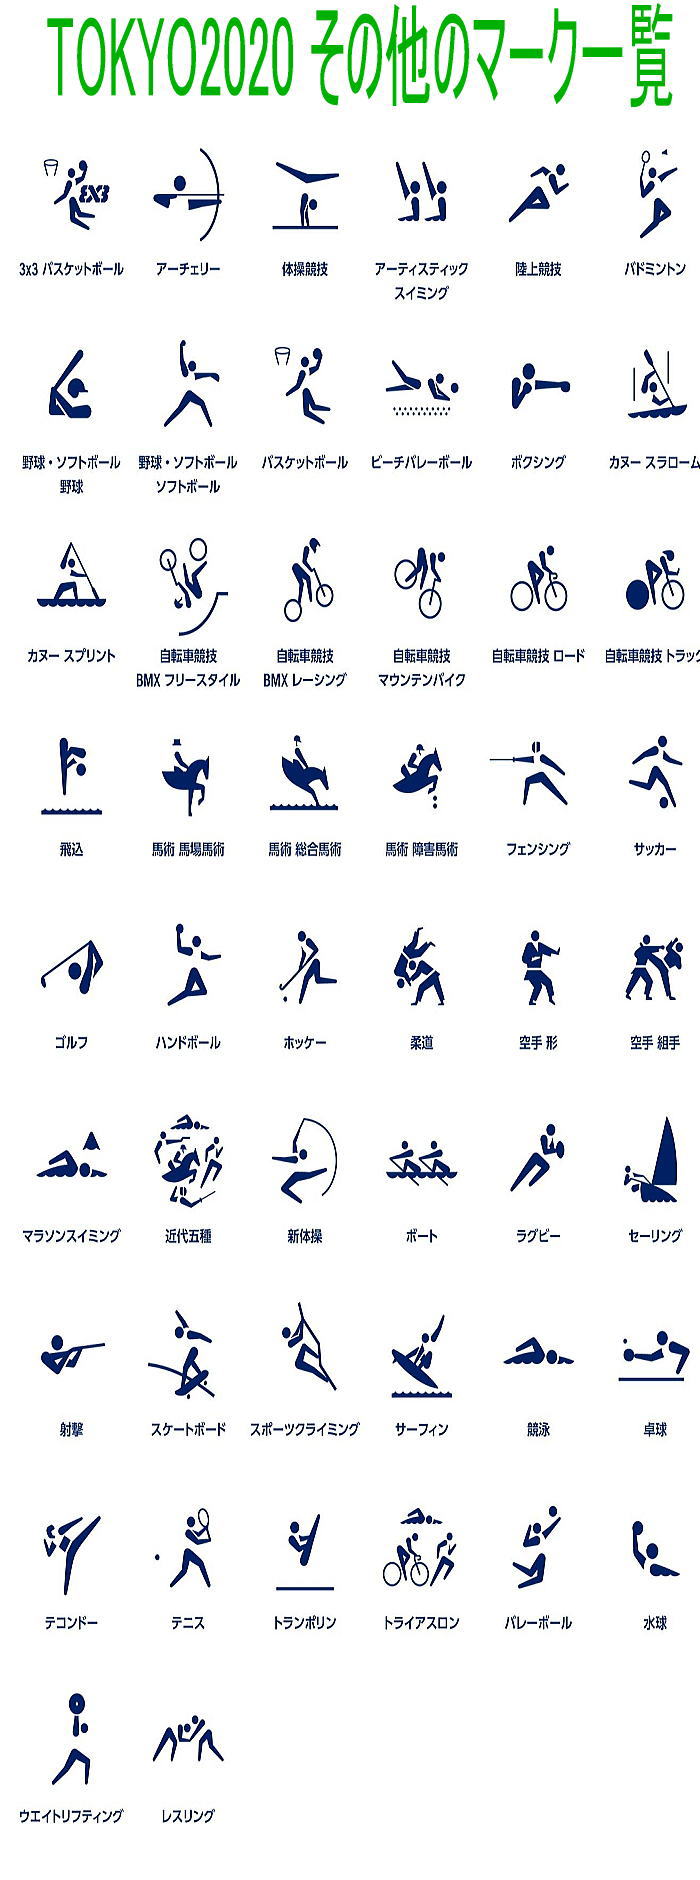 tokyo2020olympicpistgramtout - 2020 Tokyo Olympic Pictogram　ピクトグラム決定